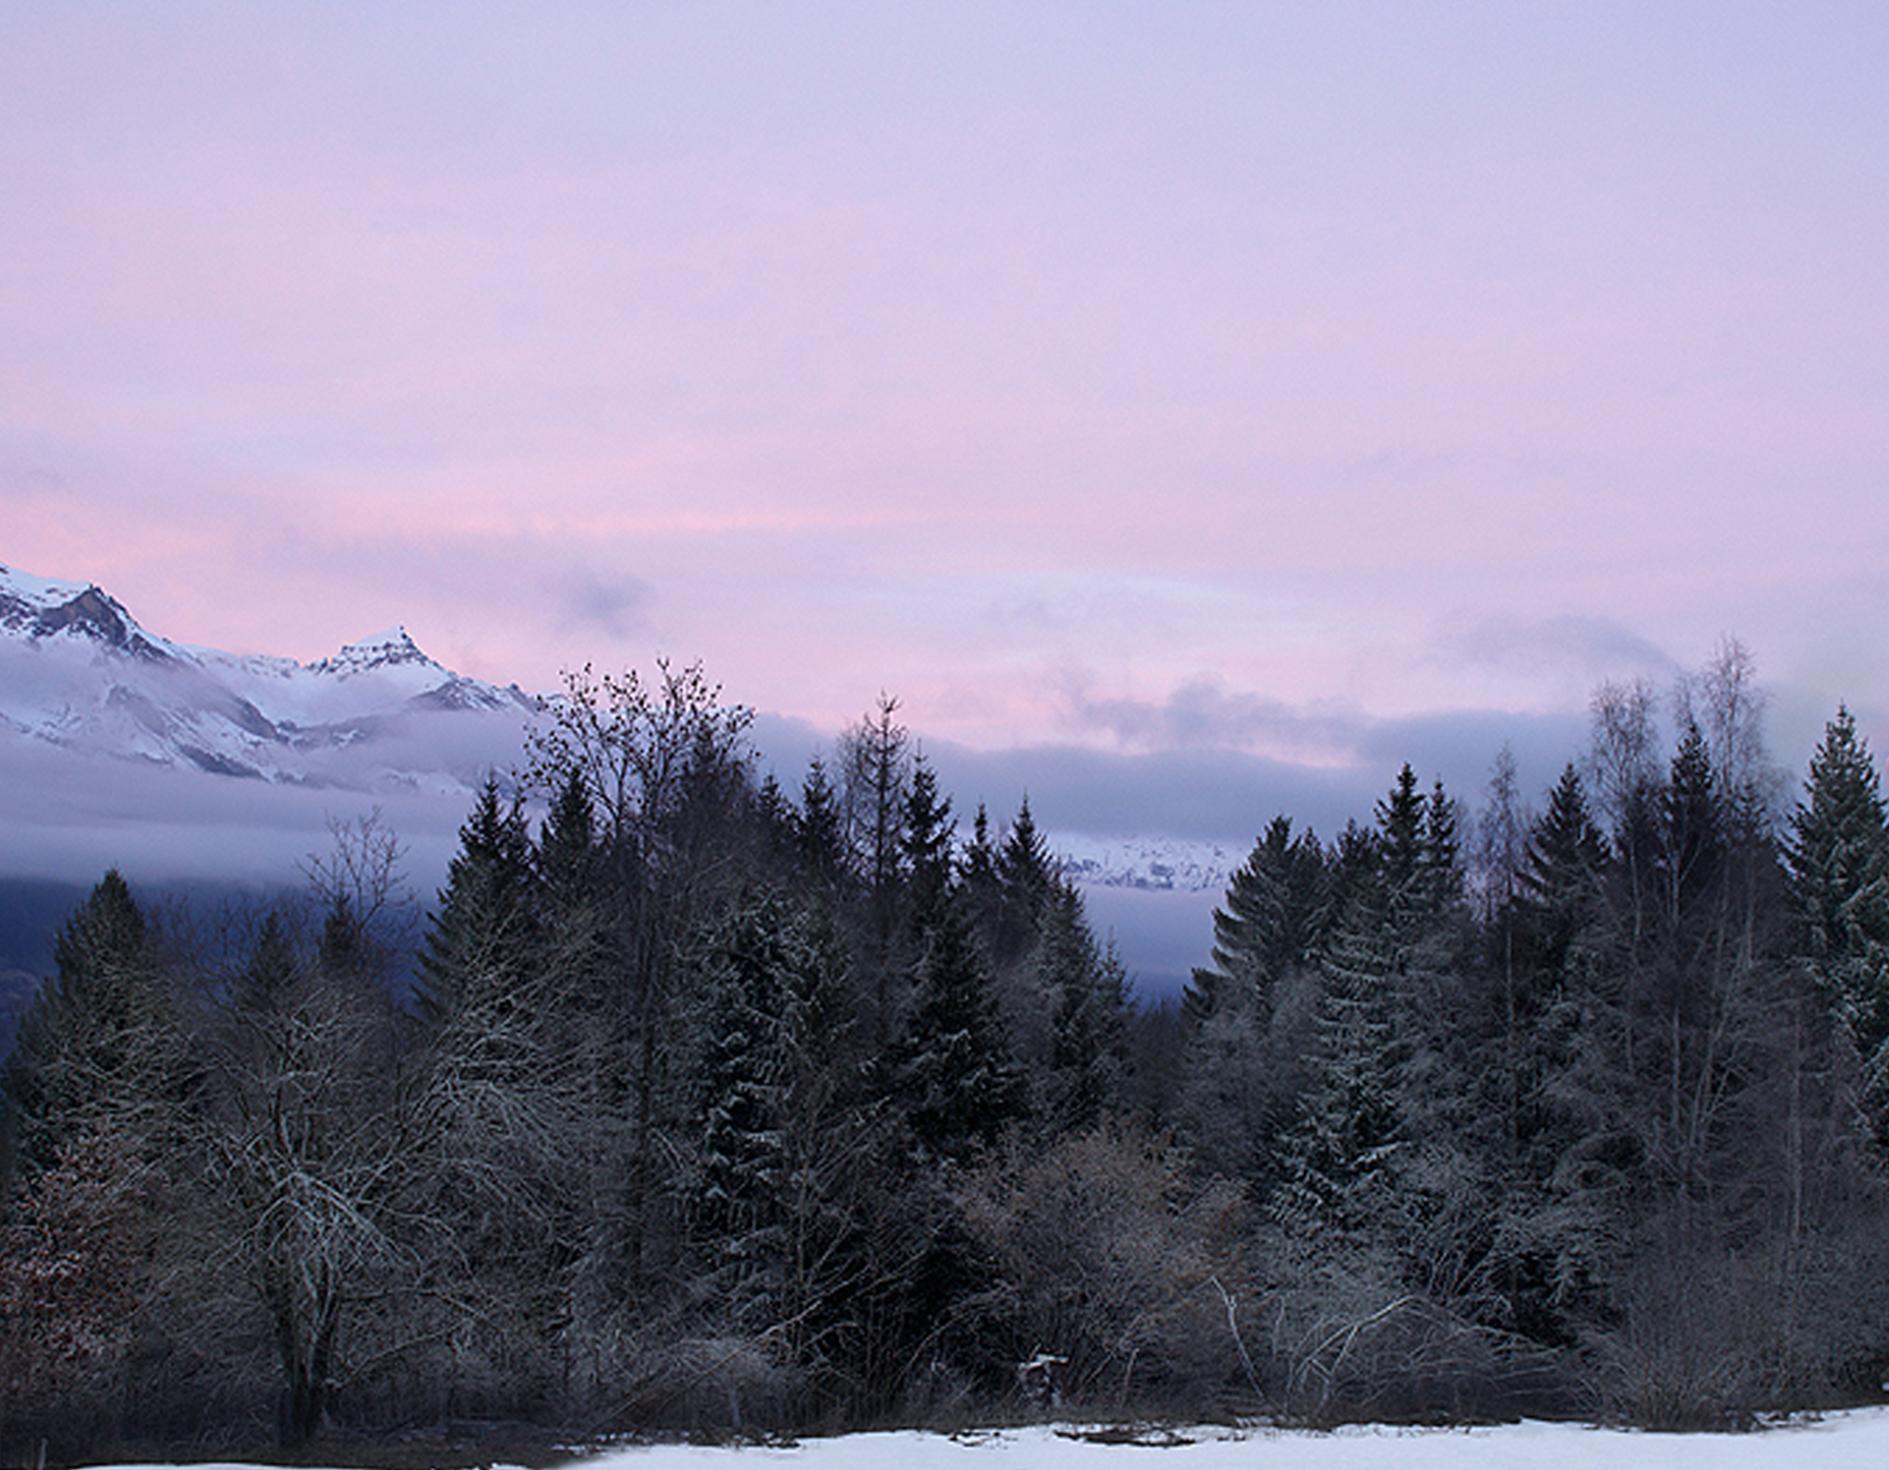 Snow Dream Pink, The Dream Art Project - Conceptual Photograph by Anne Valverde